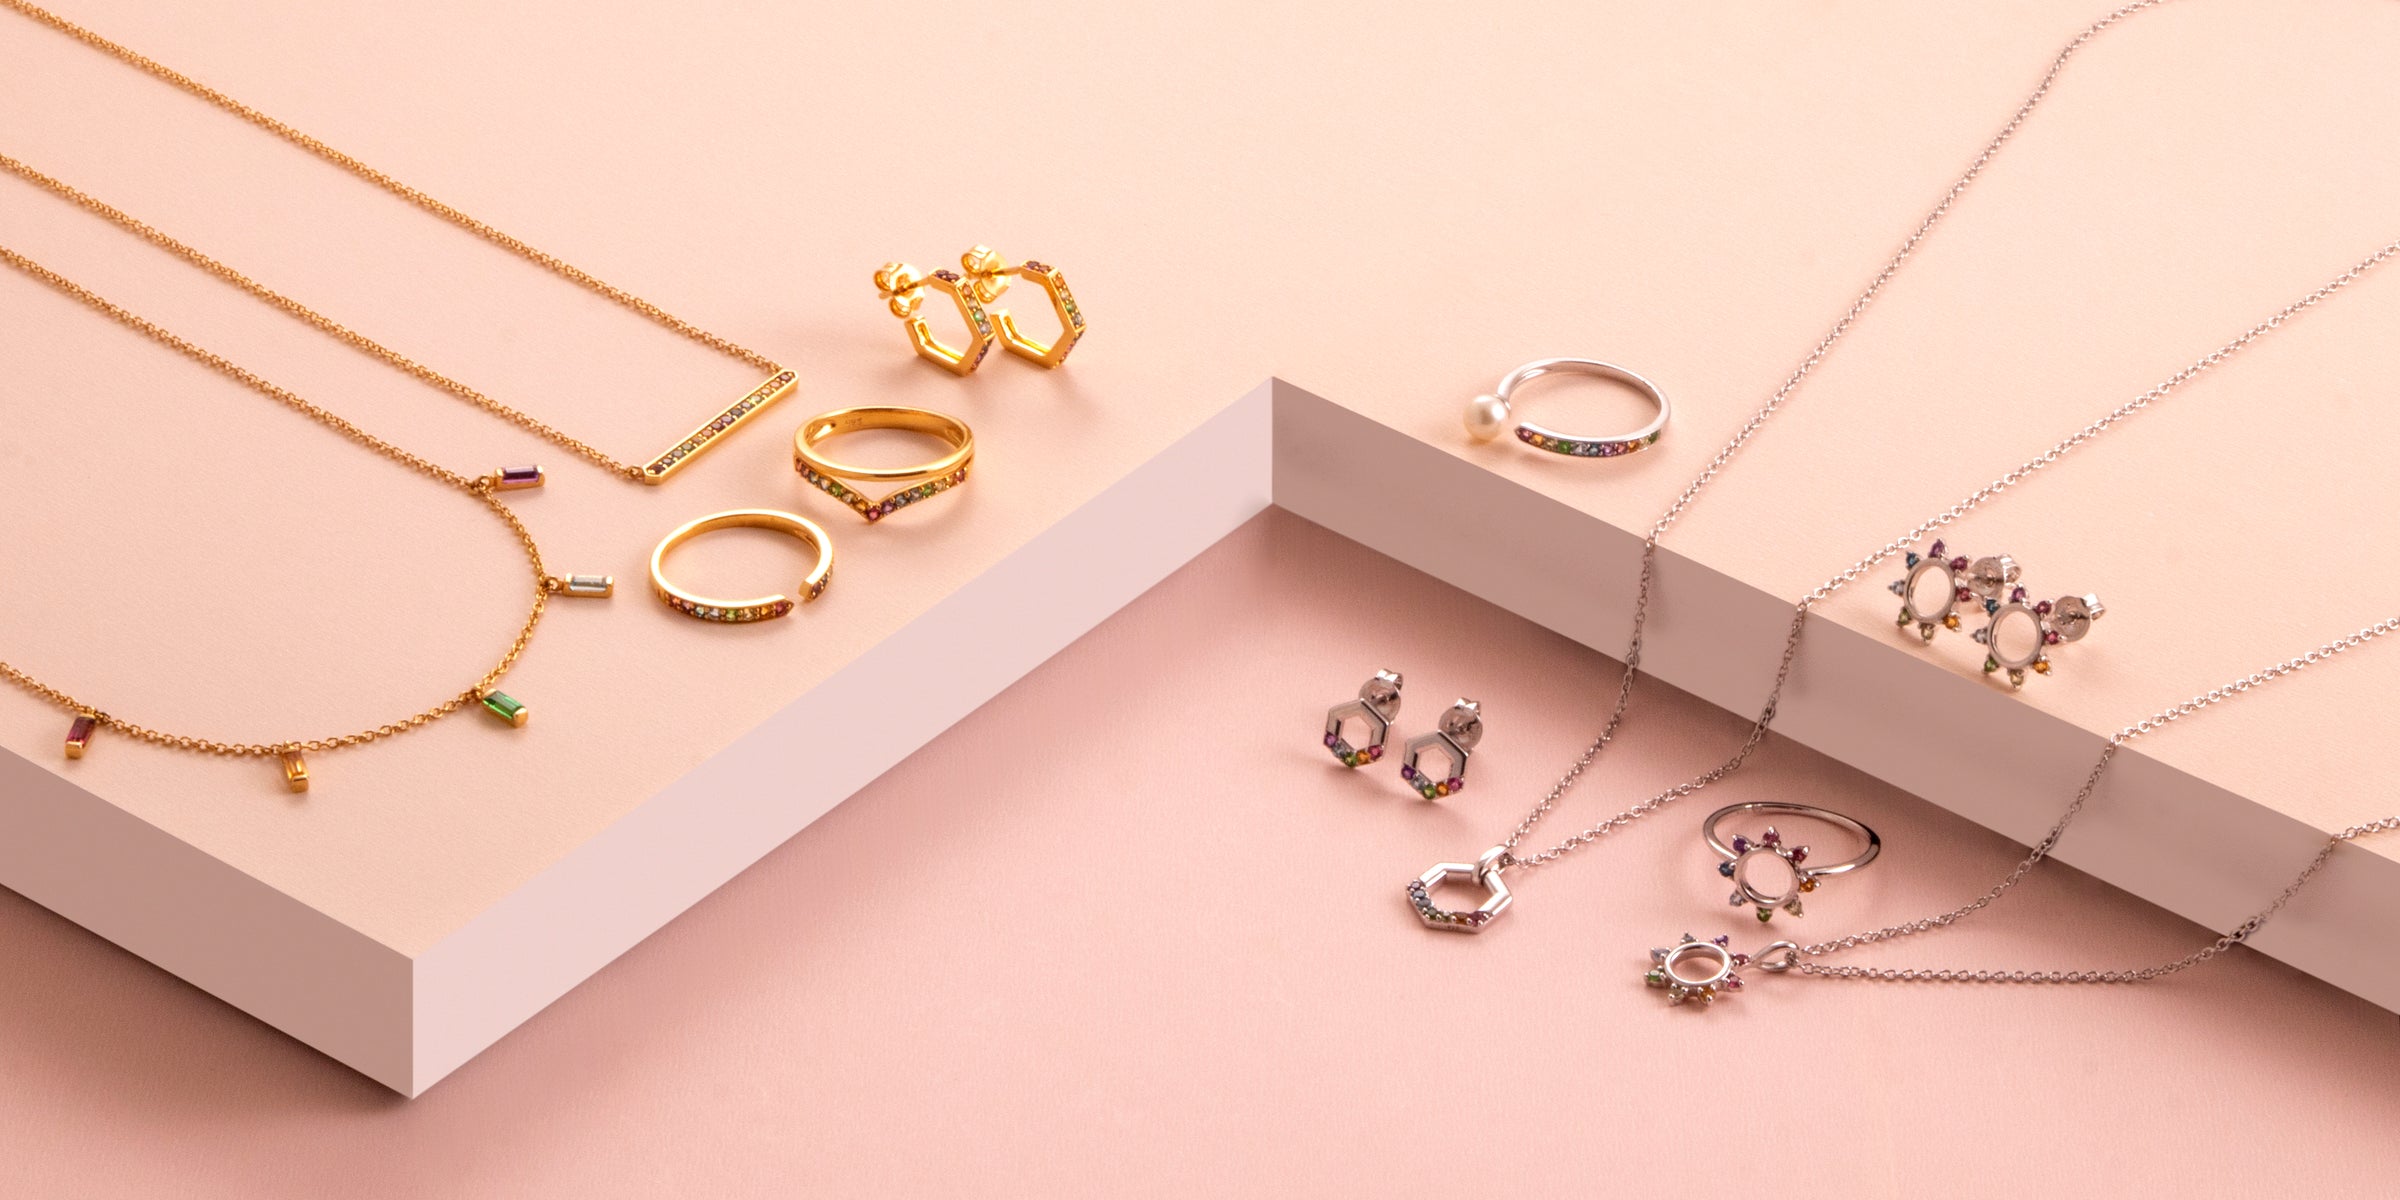 Rainbow Edit | rainbow gemstone rings, necklaces, earrings and bracelets